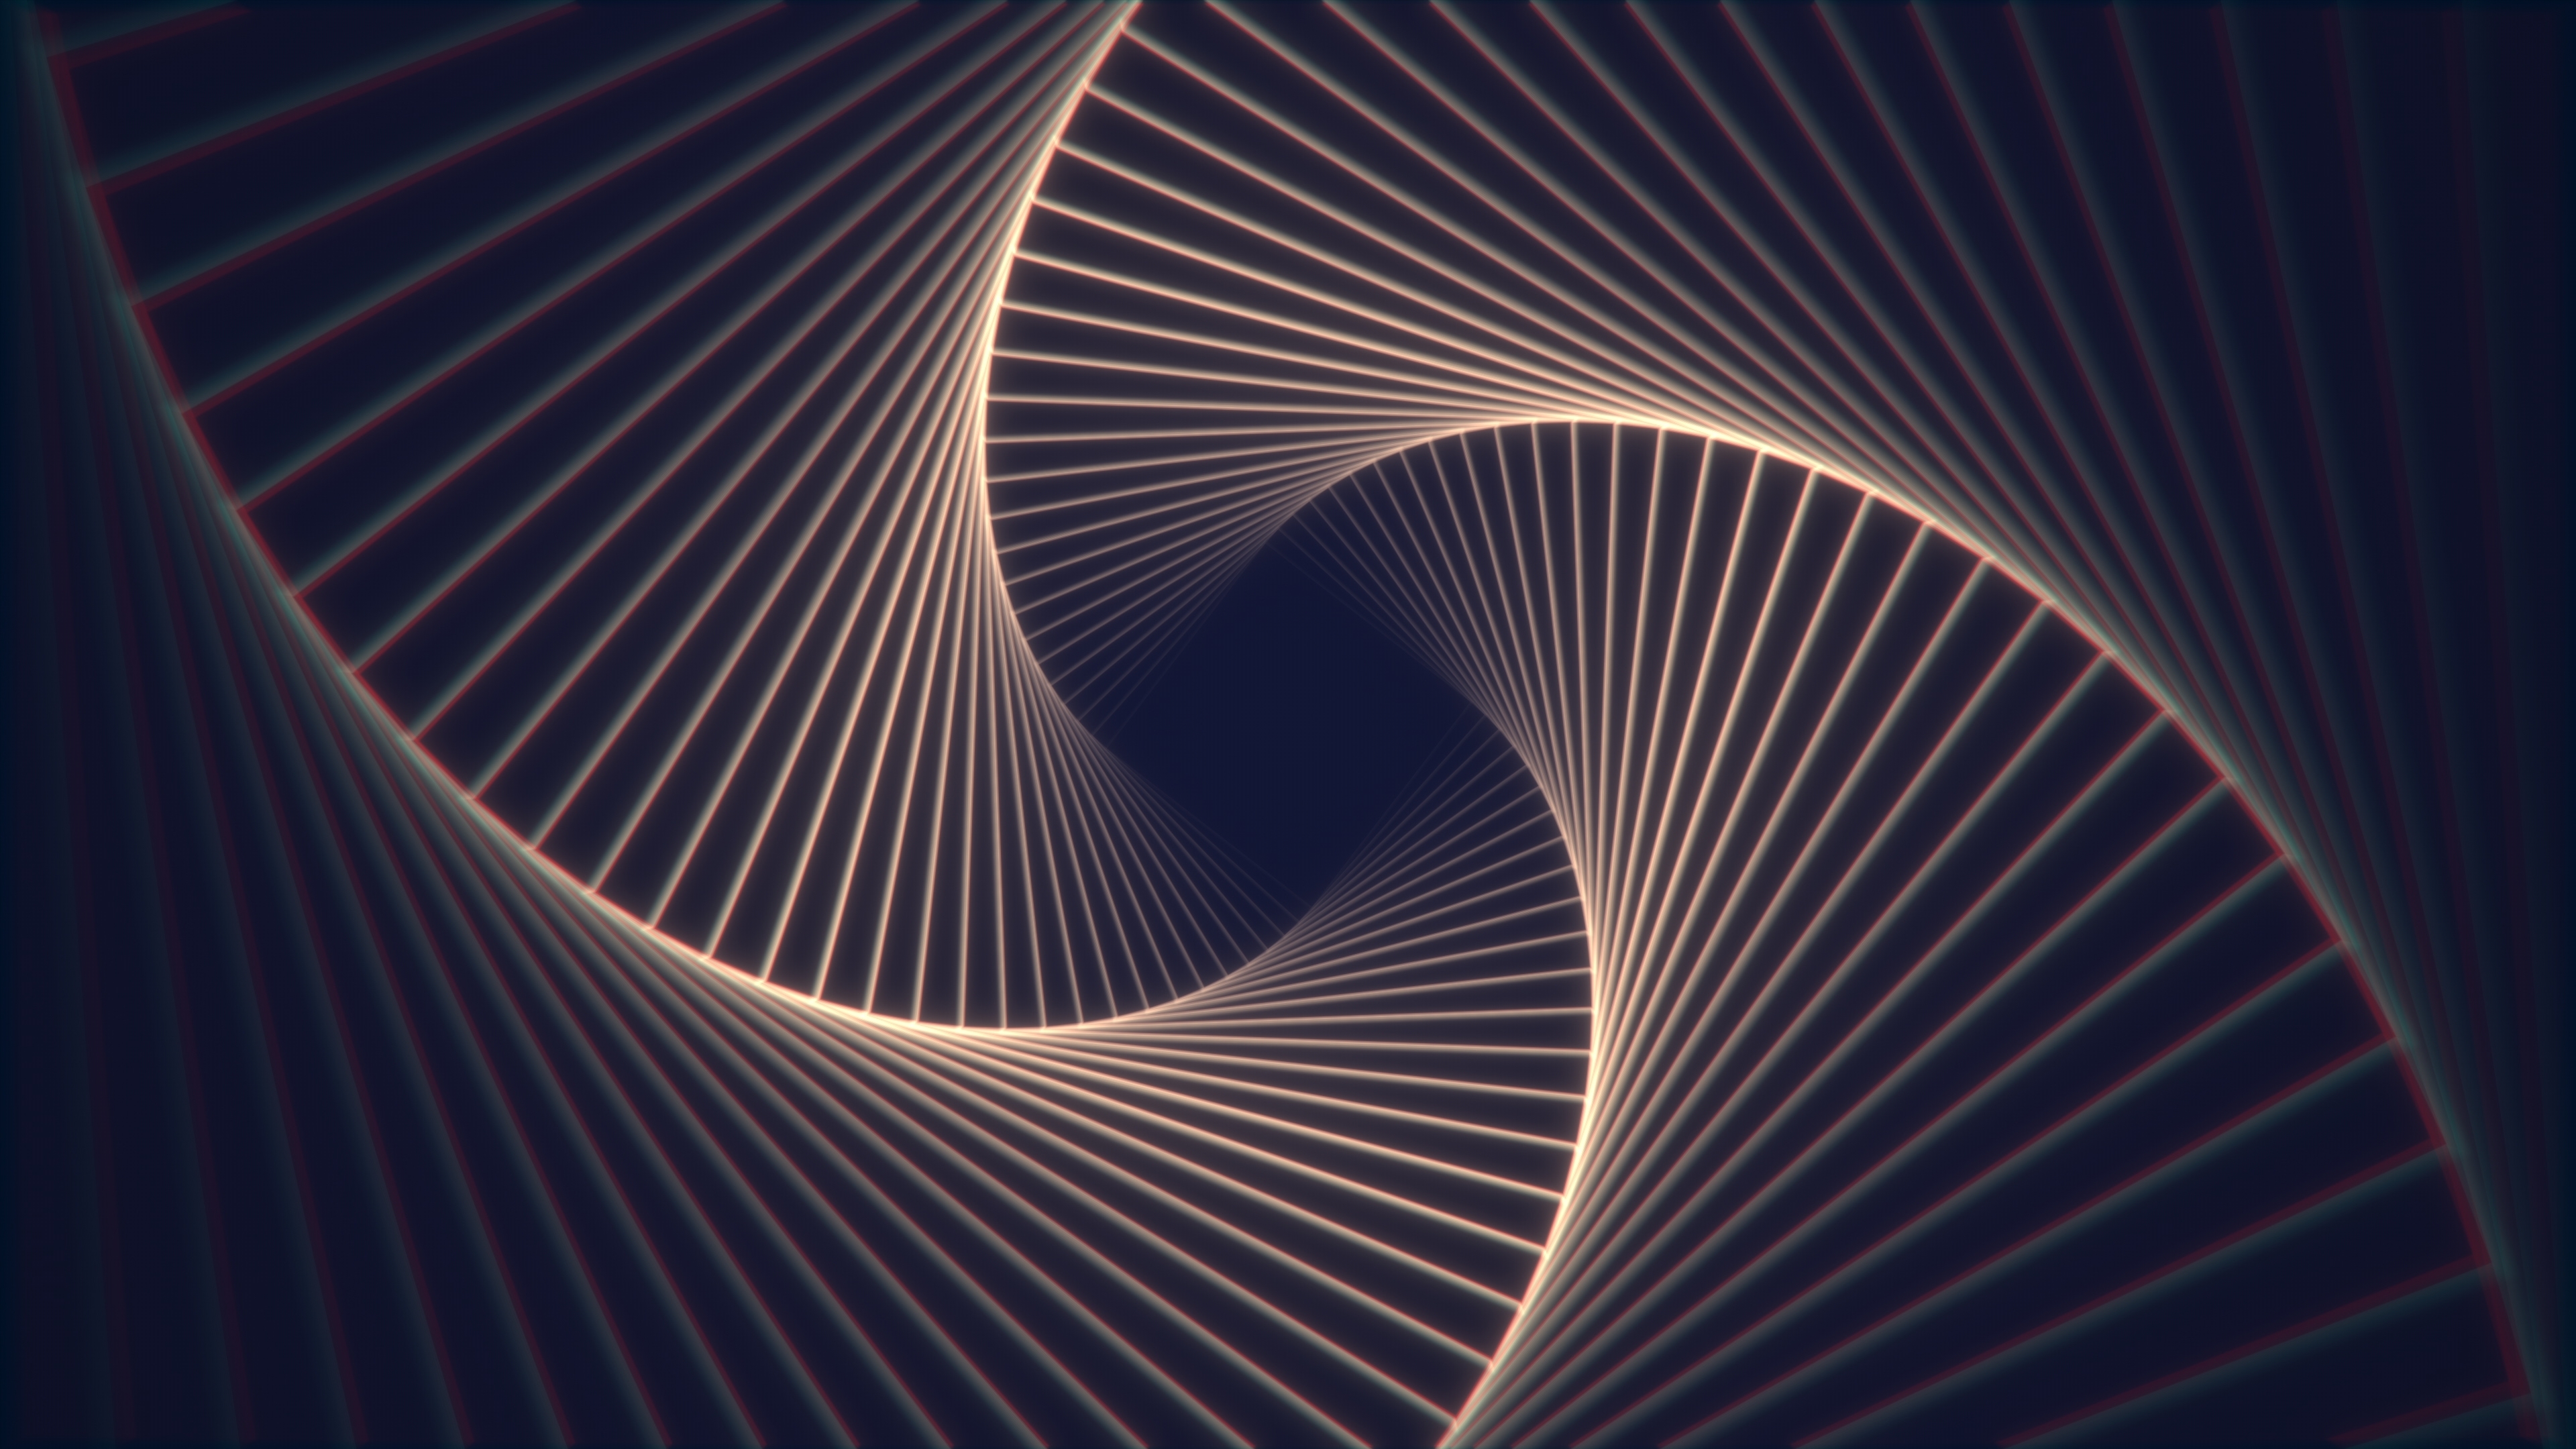 Abstract Spirals Stripe Pattern Surreal Swirls 3D Fractal 3D Digital Art 3840x2160